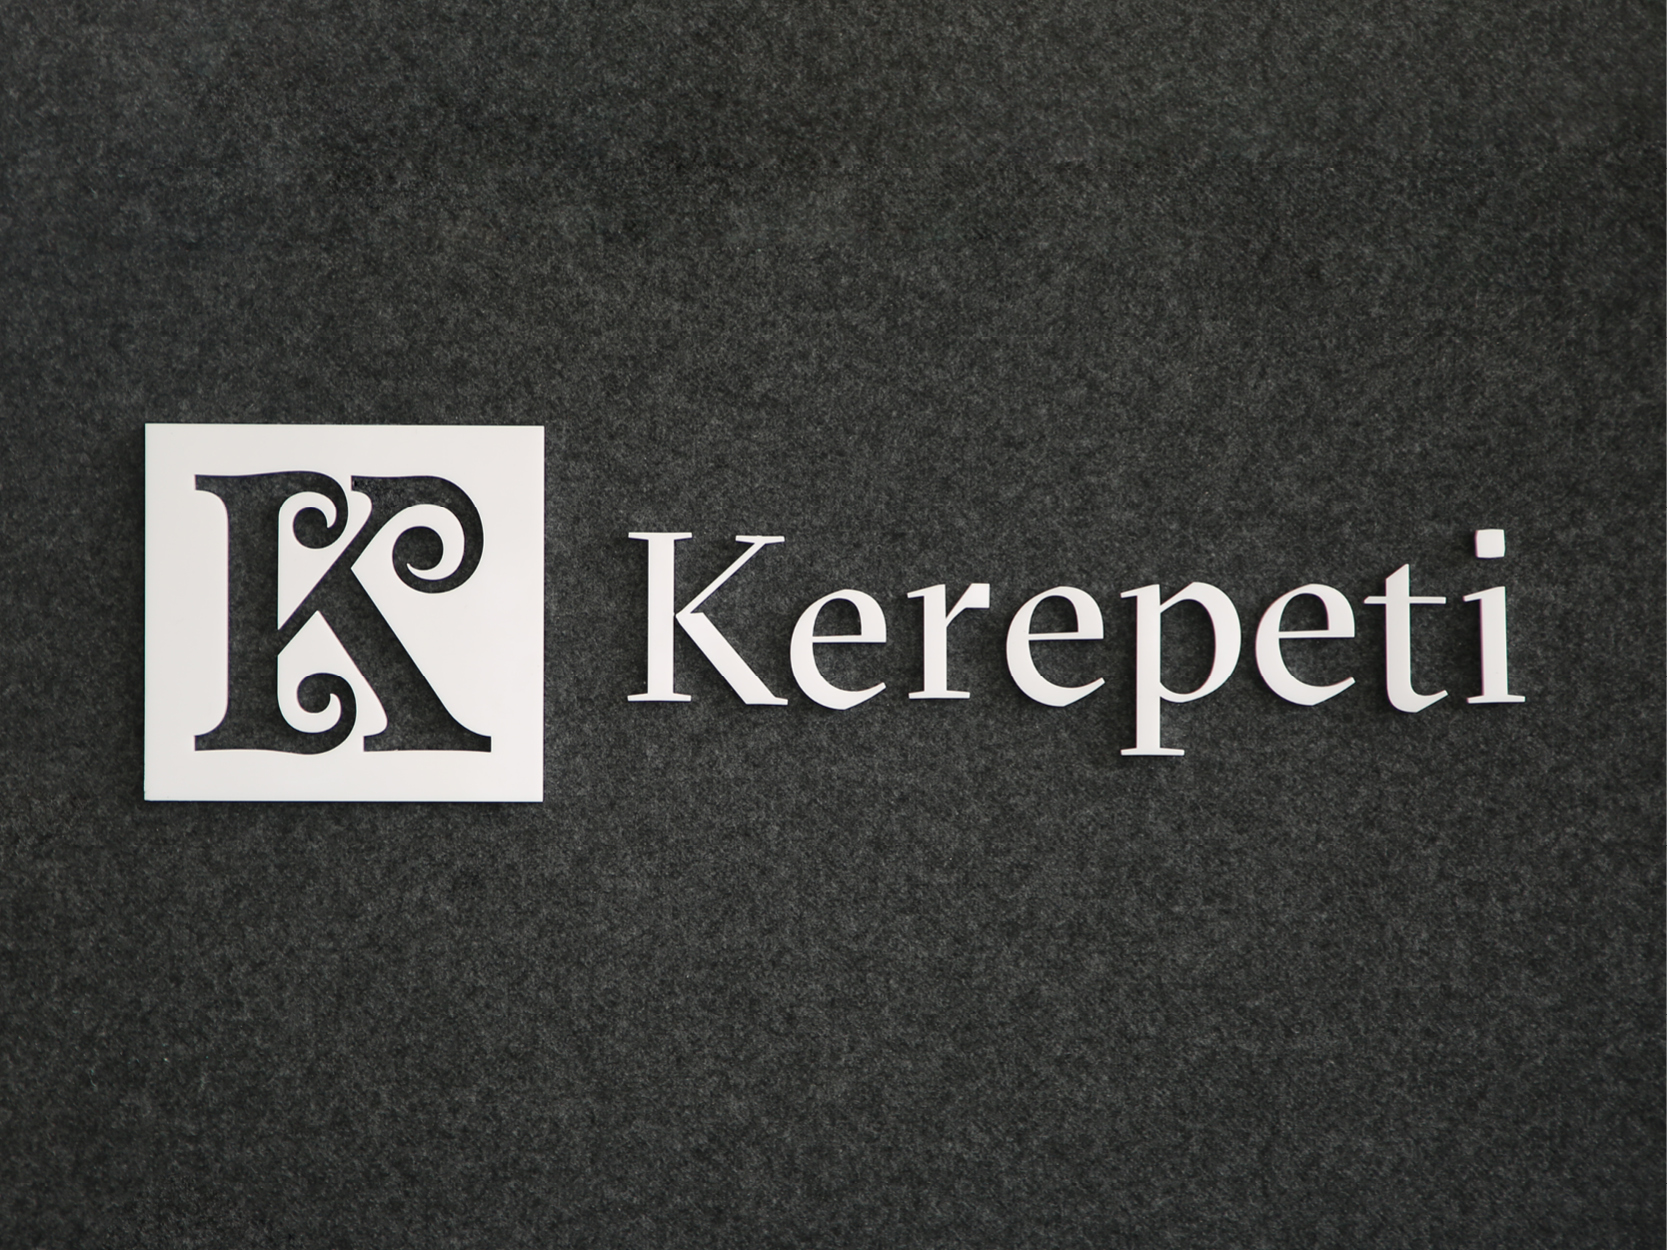 The Kerepeti logo